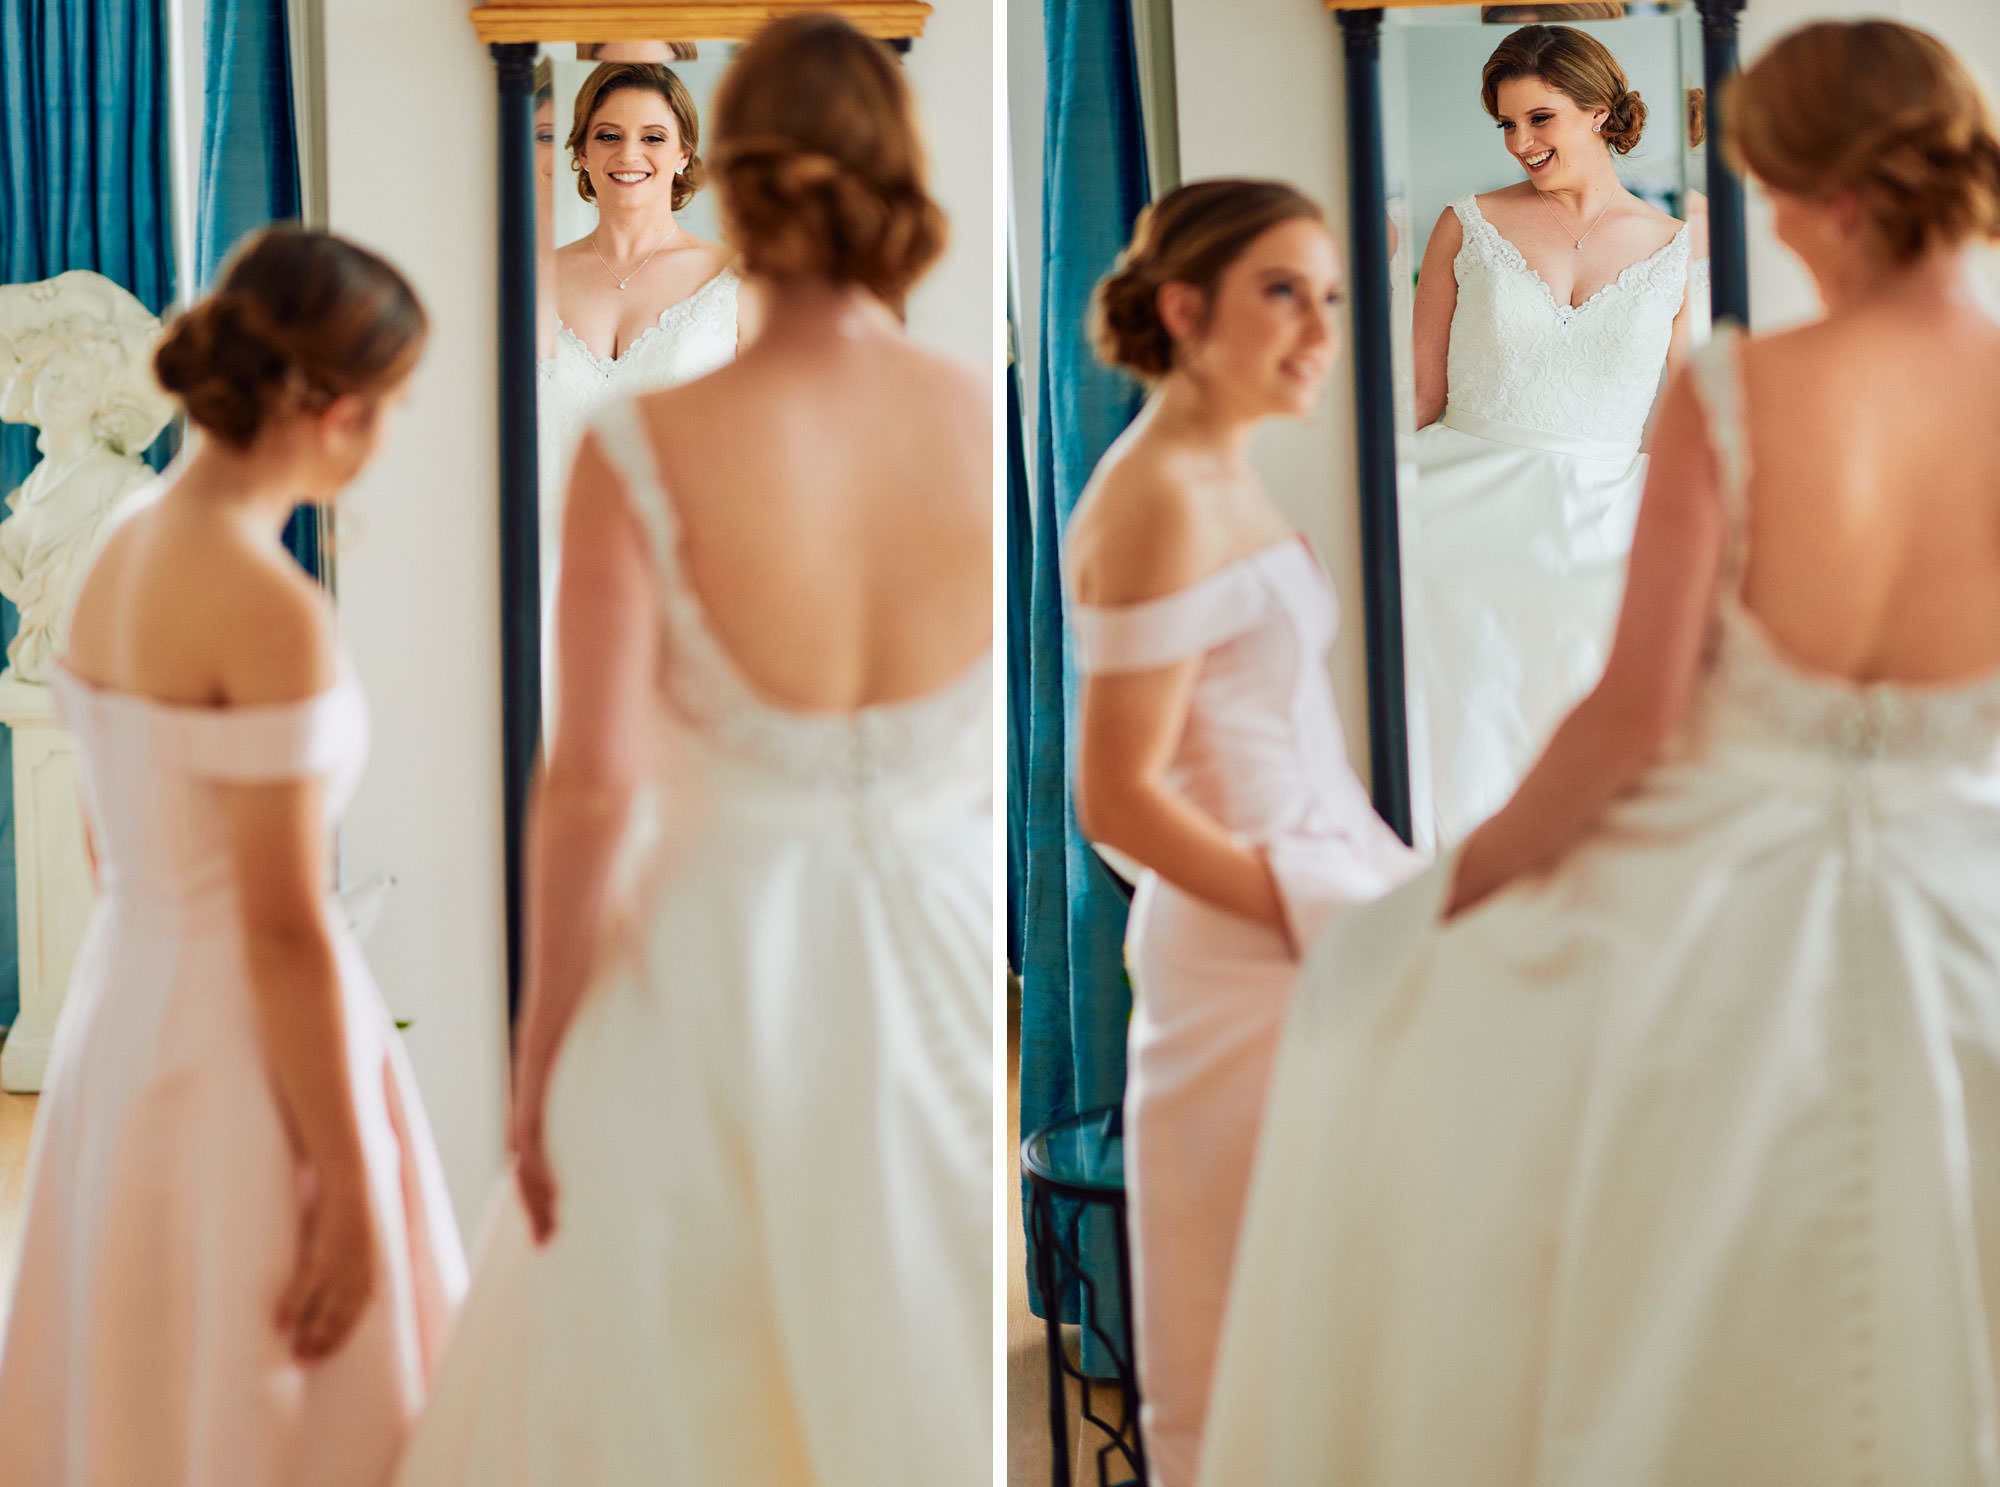 bride and bridesmaid admiring their reflection